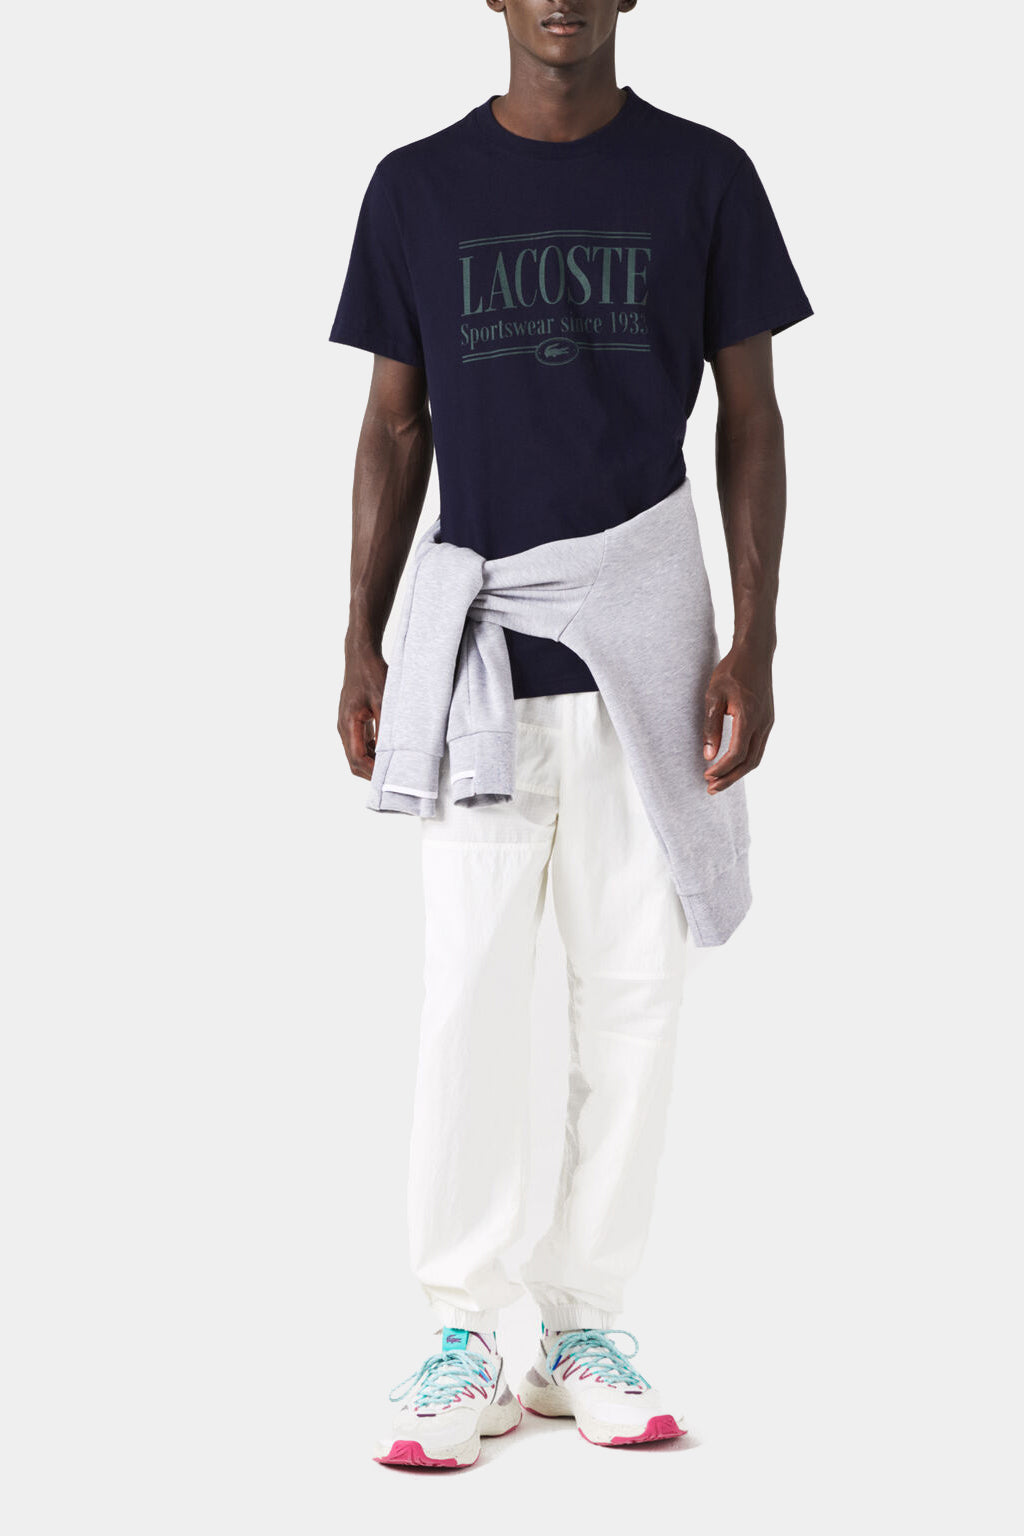 Lacoste - Men's Lacoste Regular Fit Jersey T-shirt